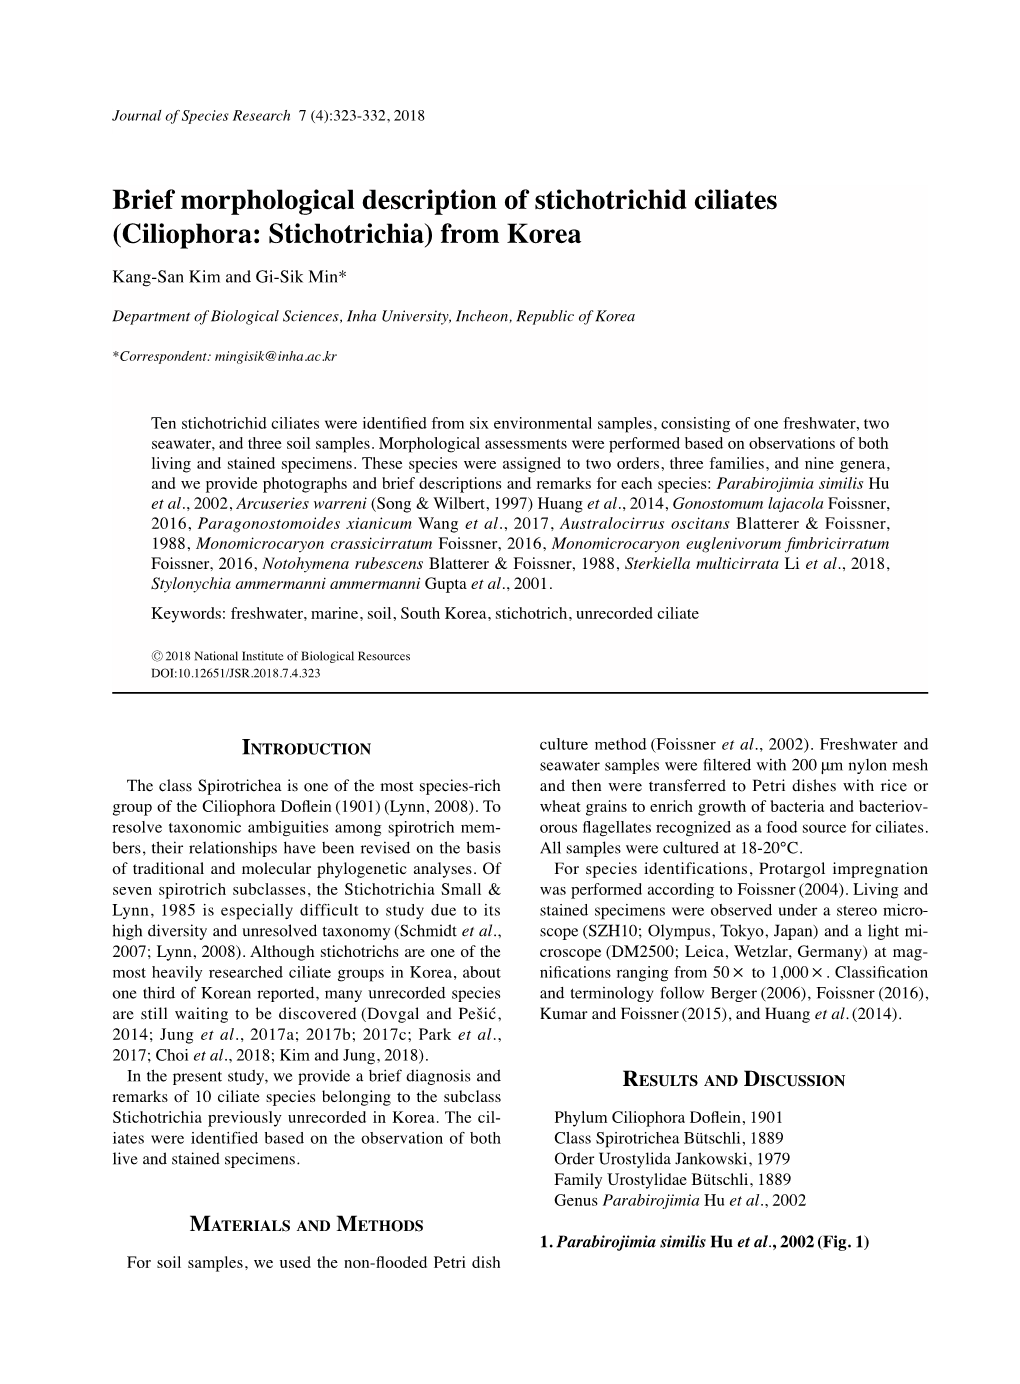 Brief Morphological Description of Stichotrichid Ciliates (Ciliophora: Stichotrichia) from Korea Kang-San Kim and Gi-Sik Min*